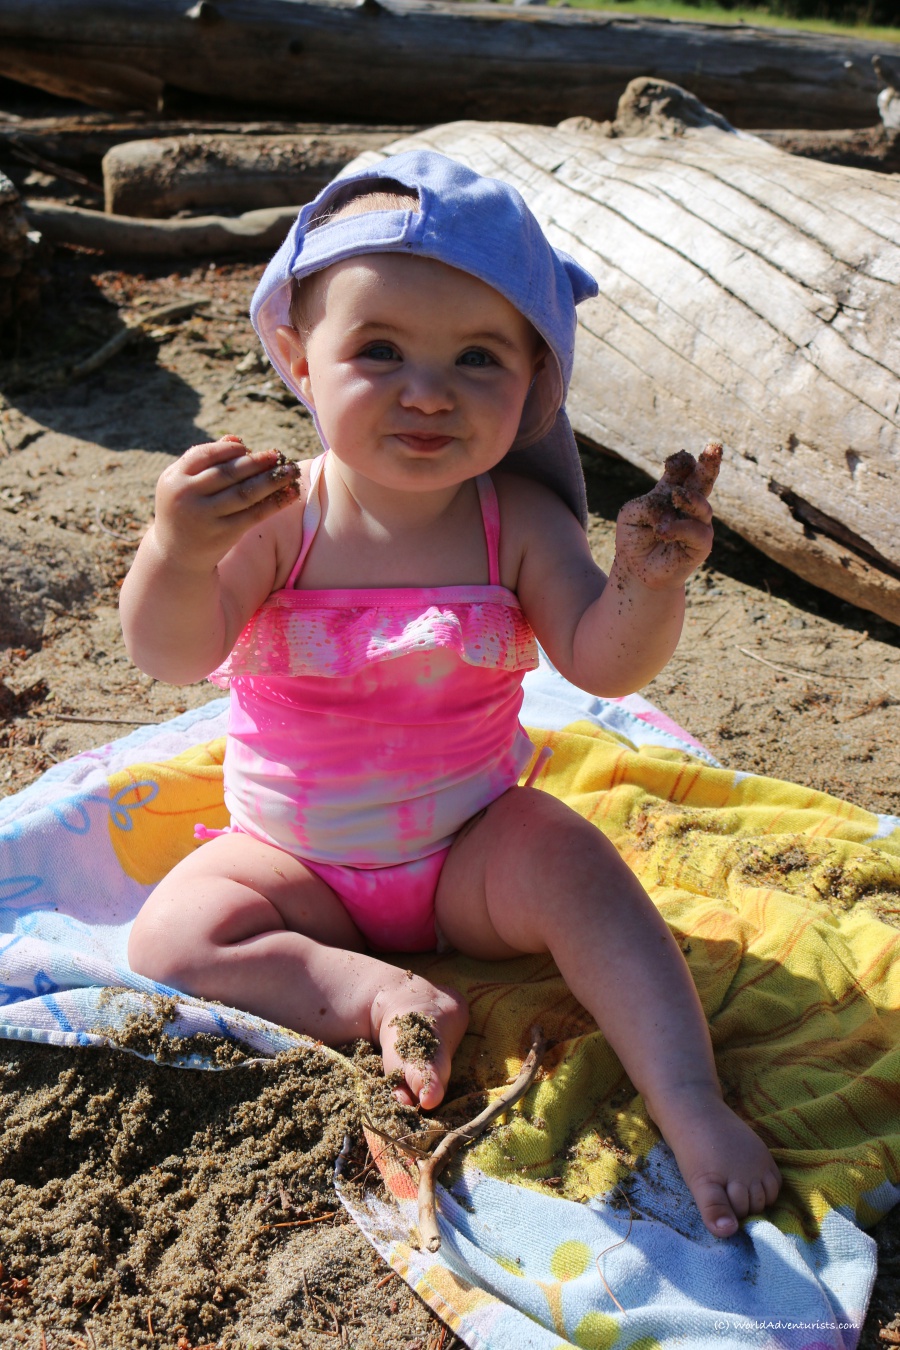 Baby enjoying the sand at Birkenhead Lake in Pemberton, BC